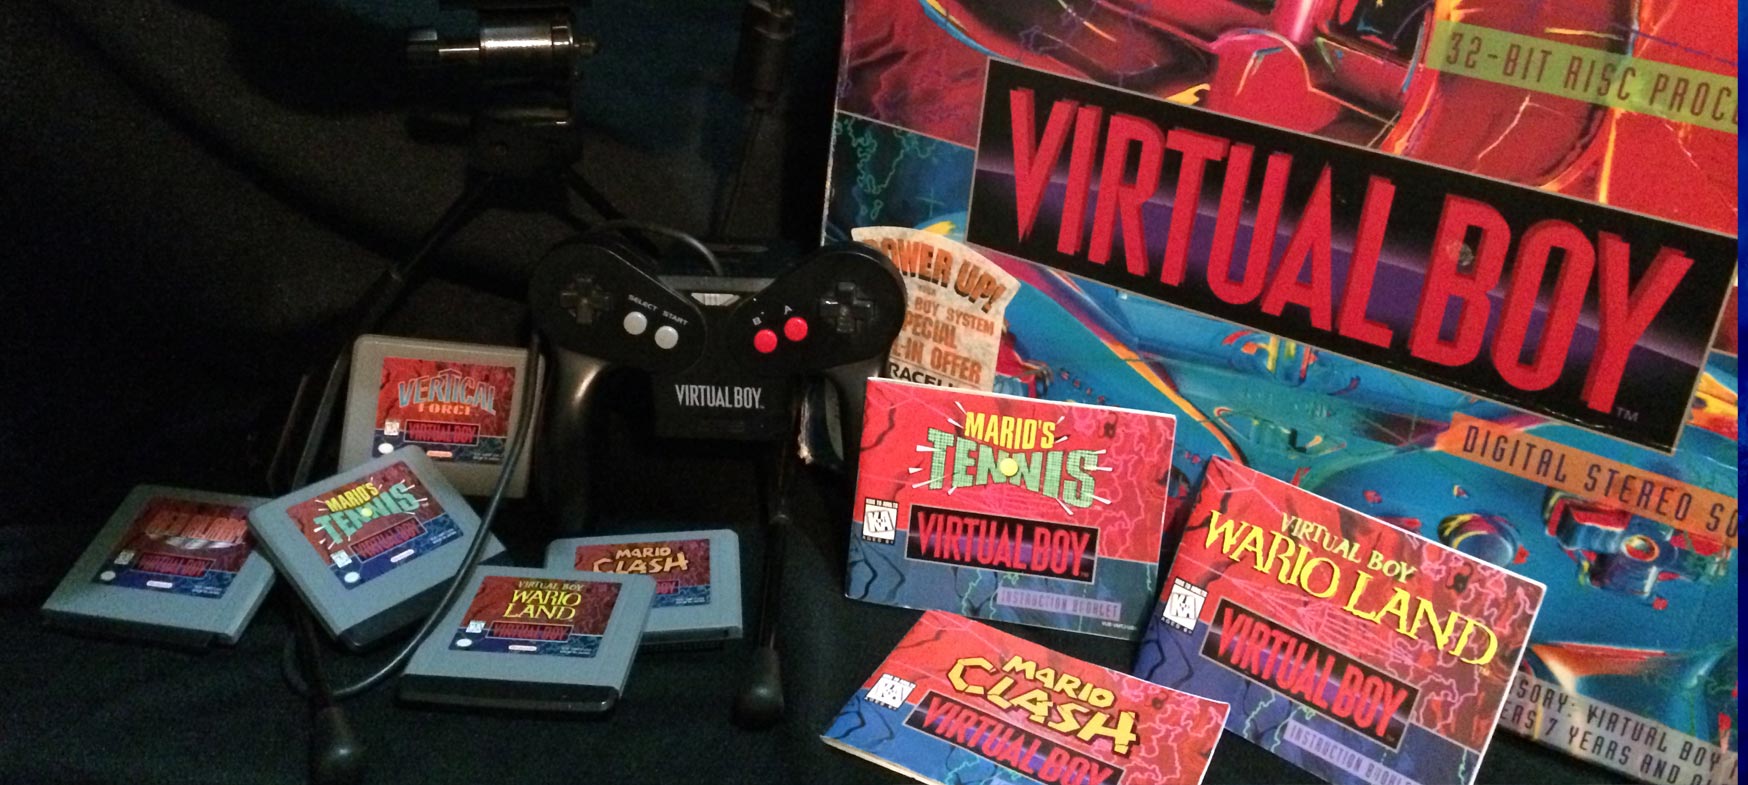 Virtual Boy: Virtual Reality Before it was Virtual Reality